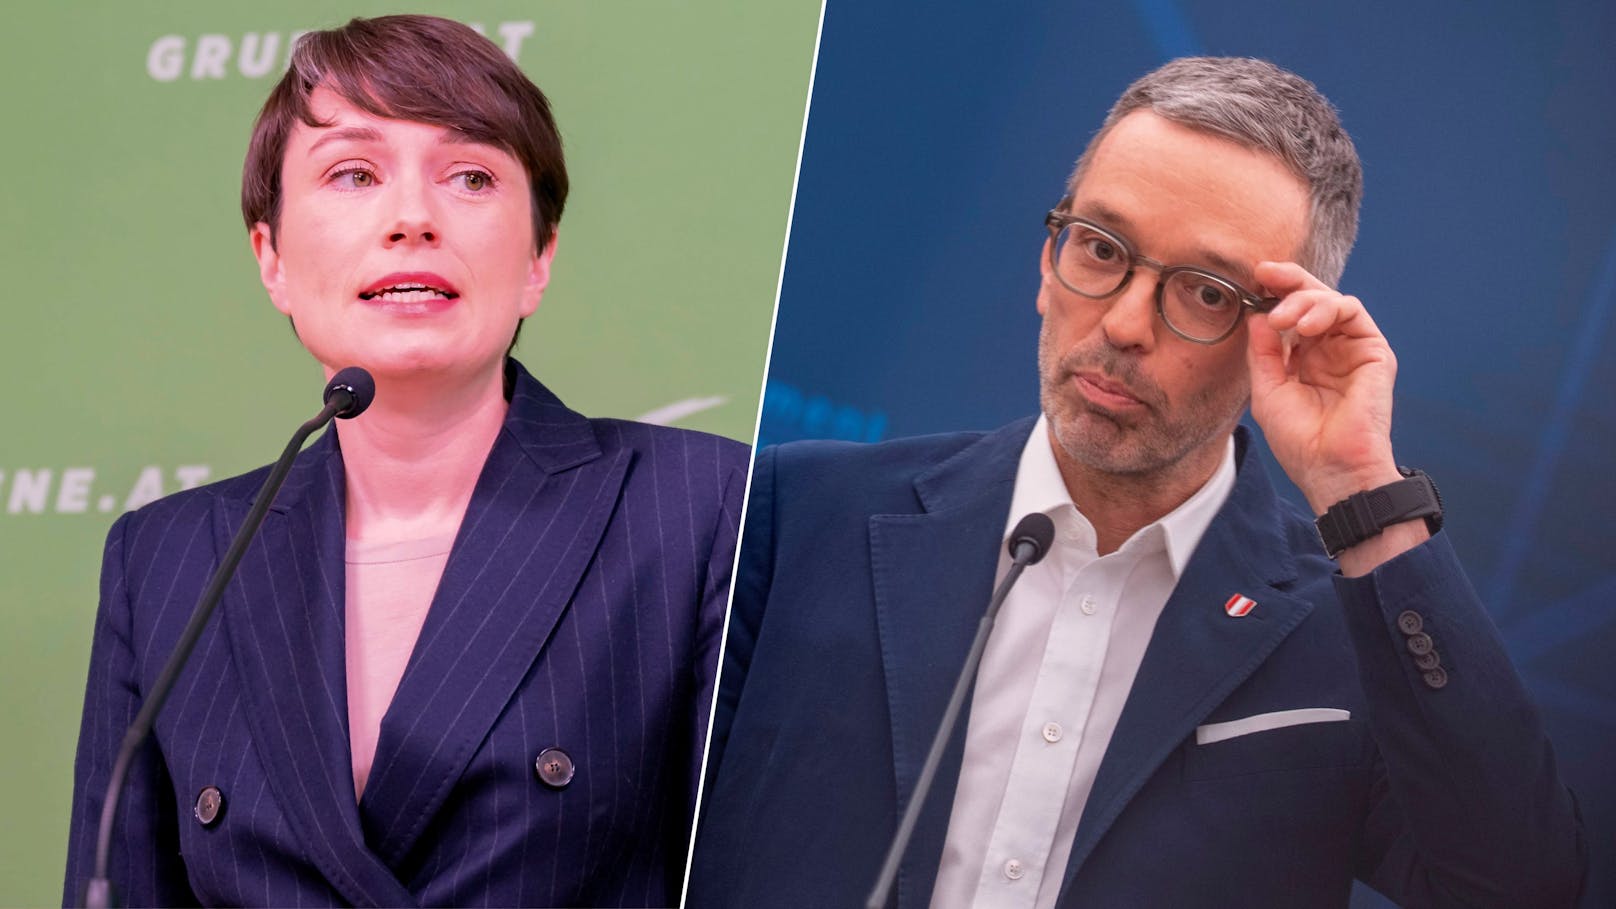 Grüne greifen Kickl an – "FPÖ verlängerter Arm Putins"